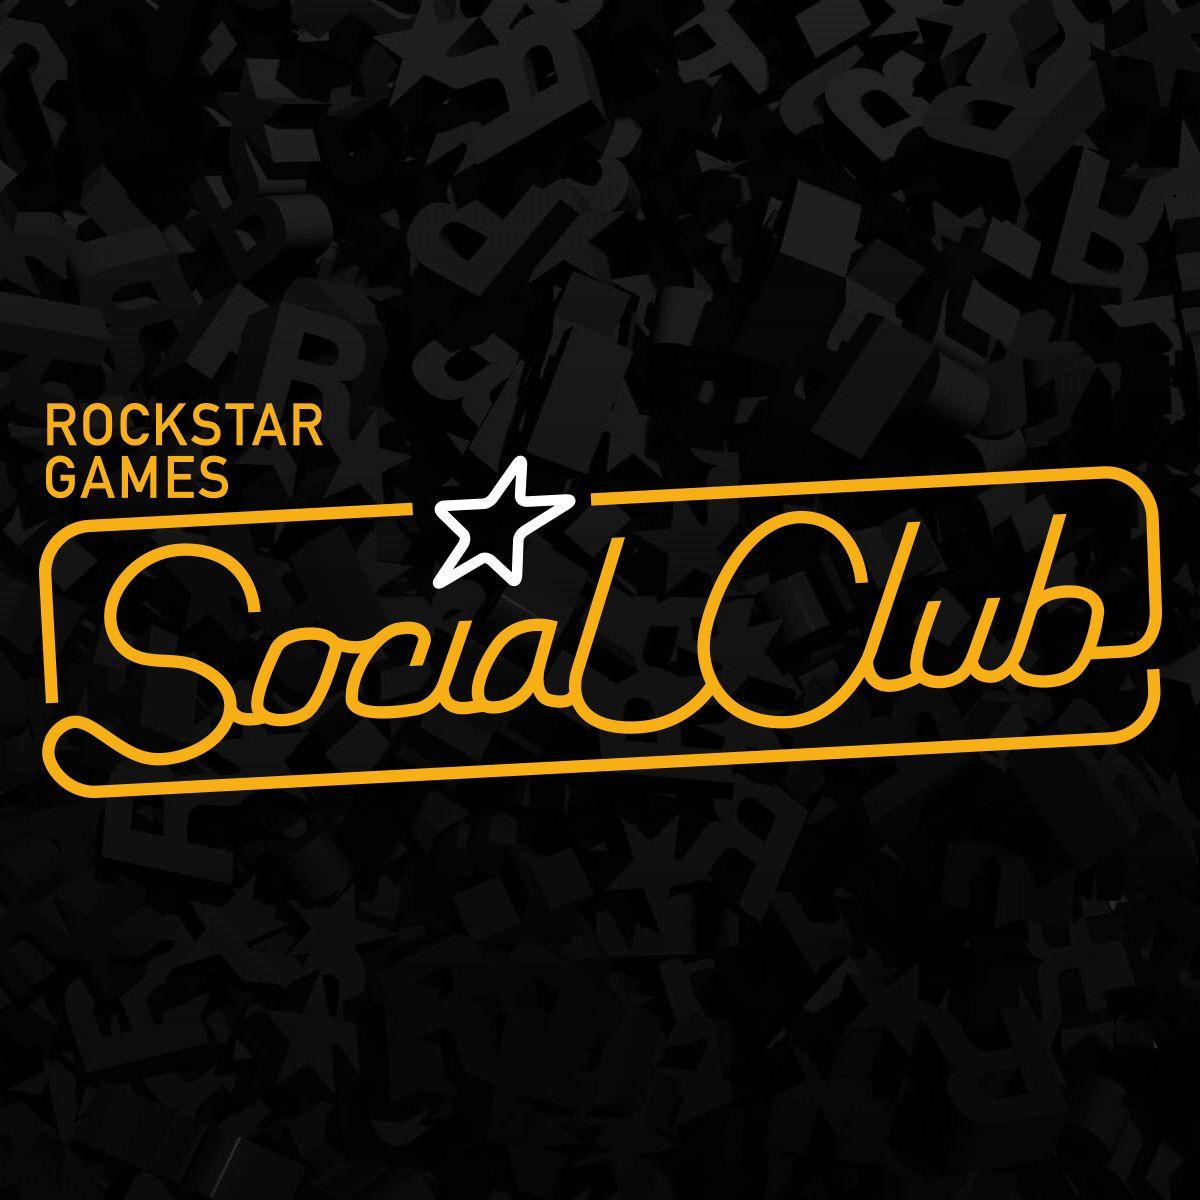 как связать rockstar social club со steam фото 63